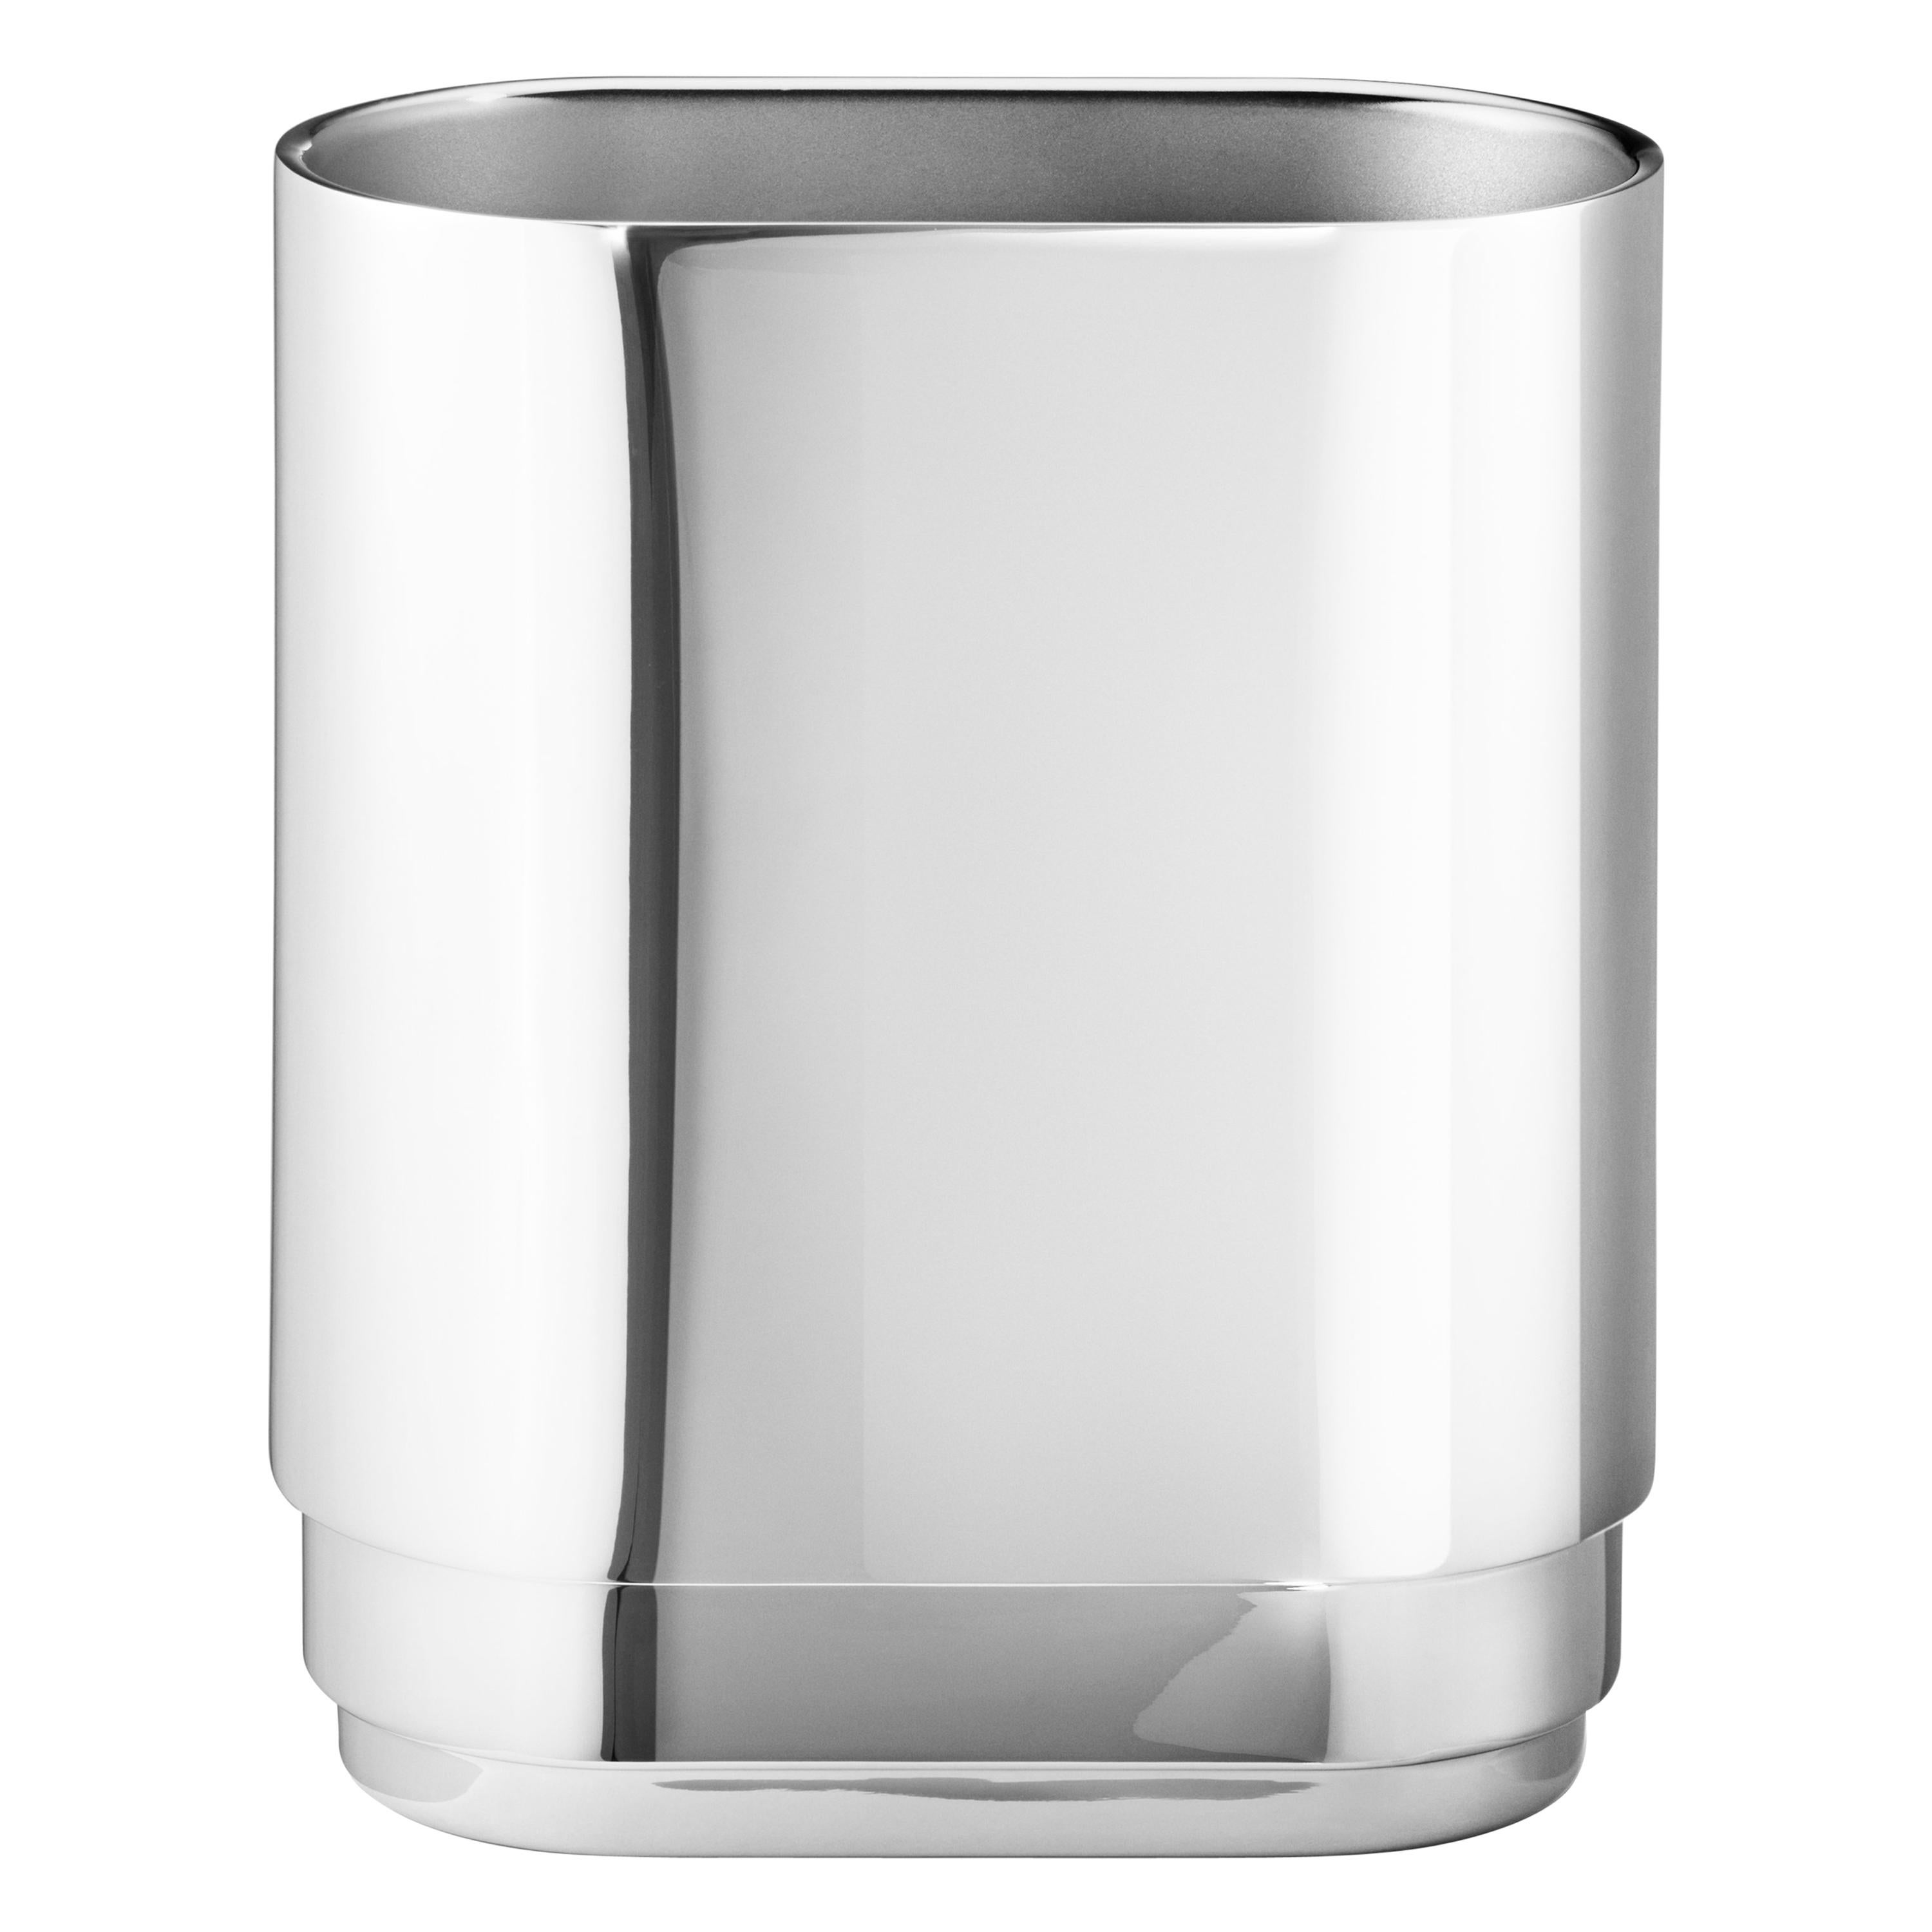 Manhattan Small Vase in Stainless Steel by Georg Jensen